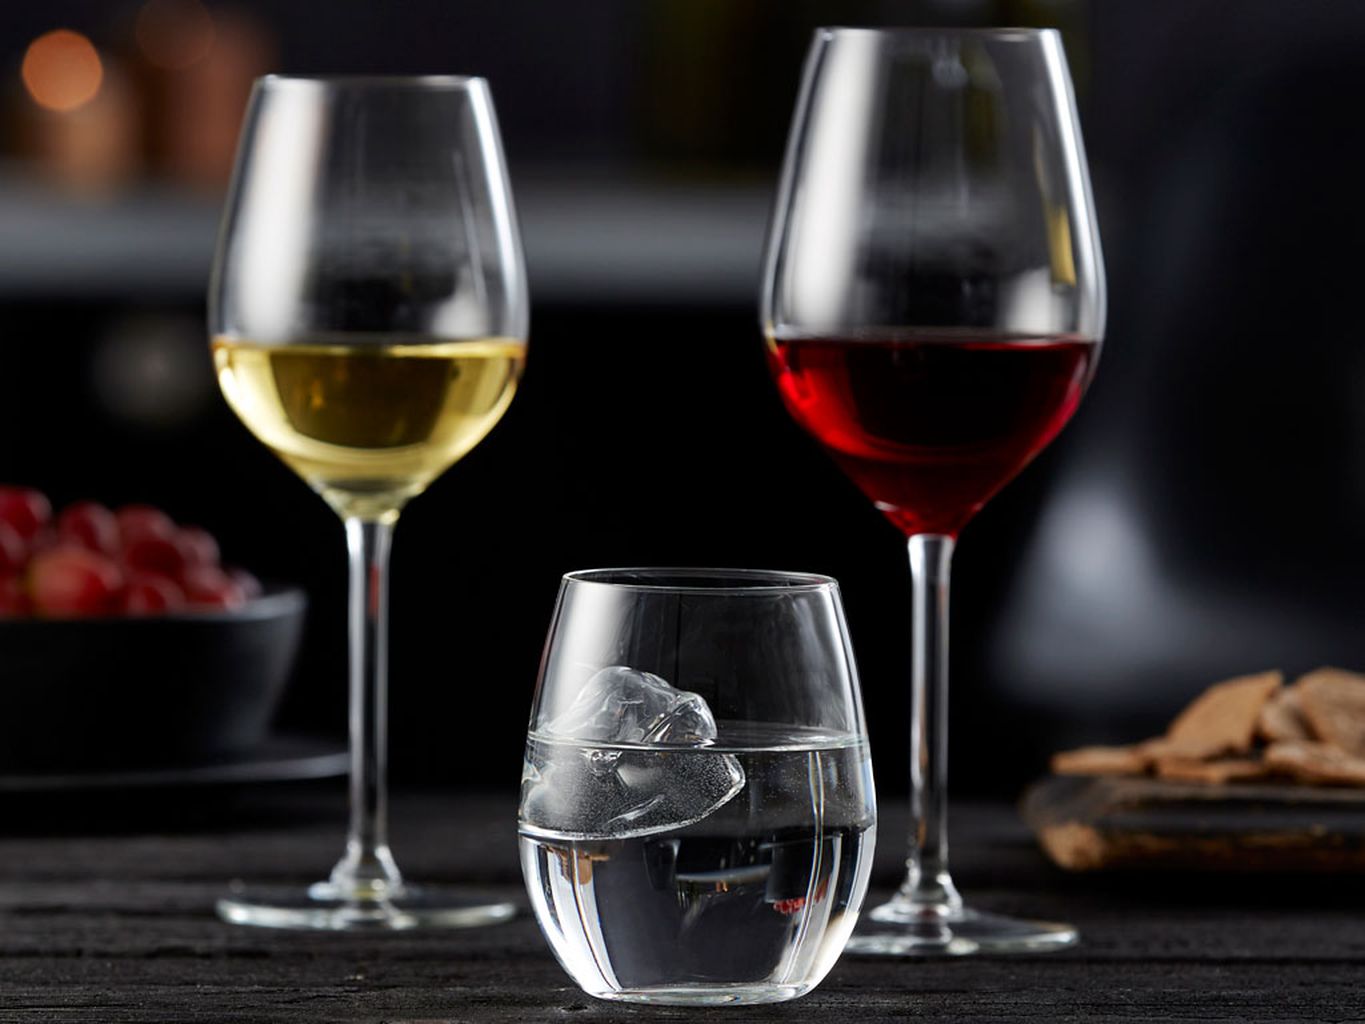 Lyngby Glas Juvel White Wine Glass 38 Cl, 4 ks.